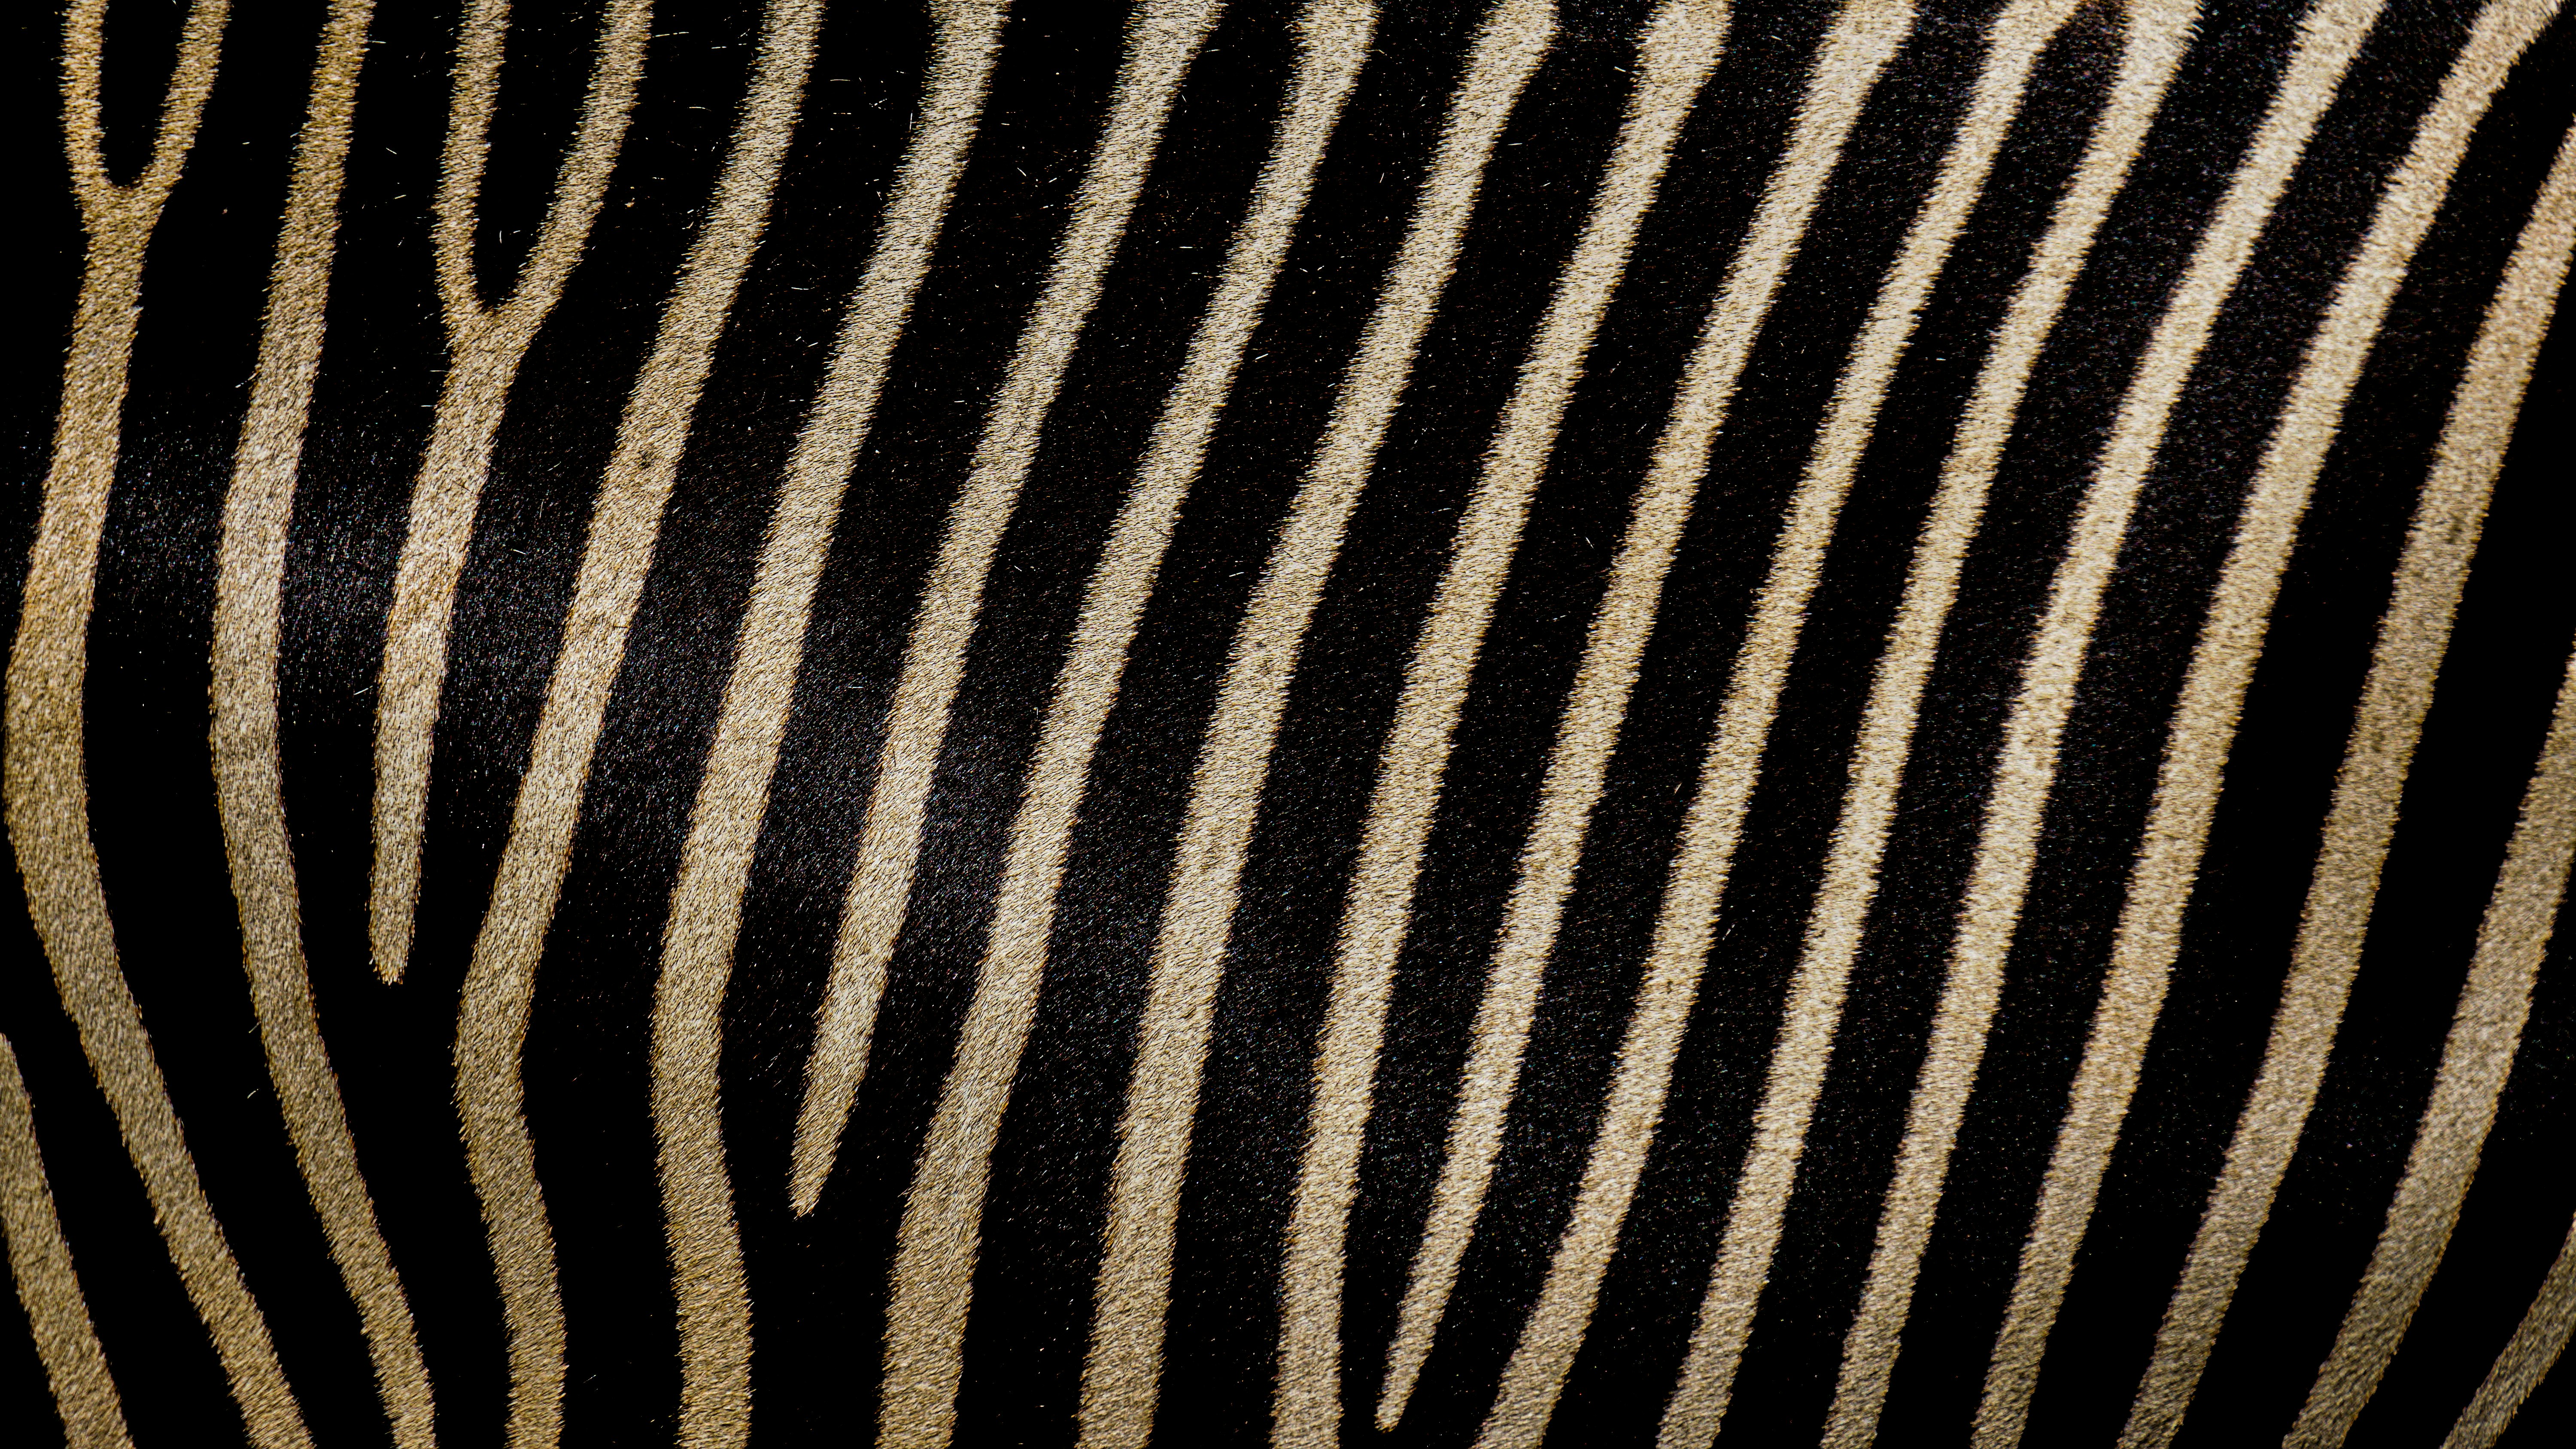 black and white striped textile